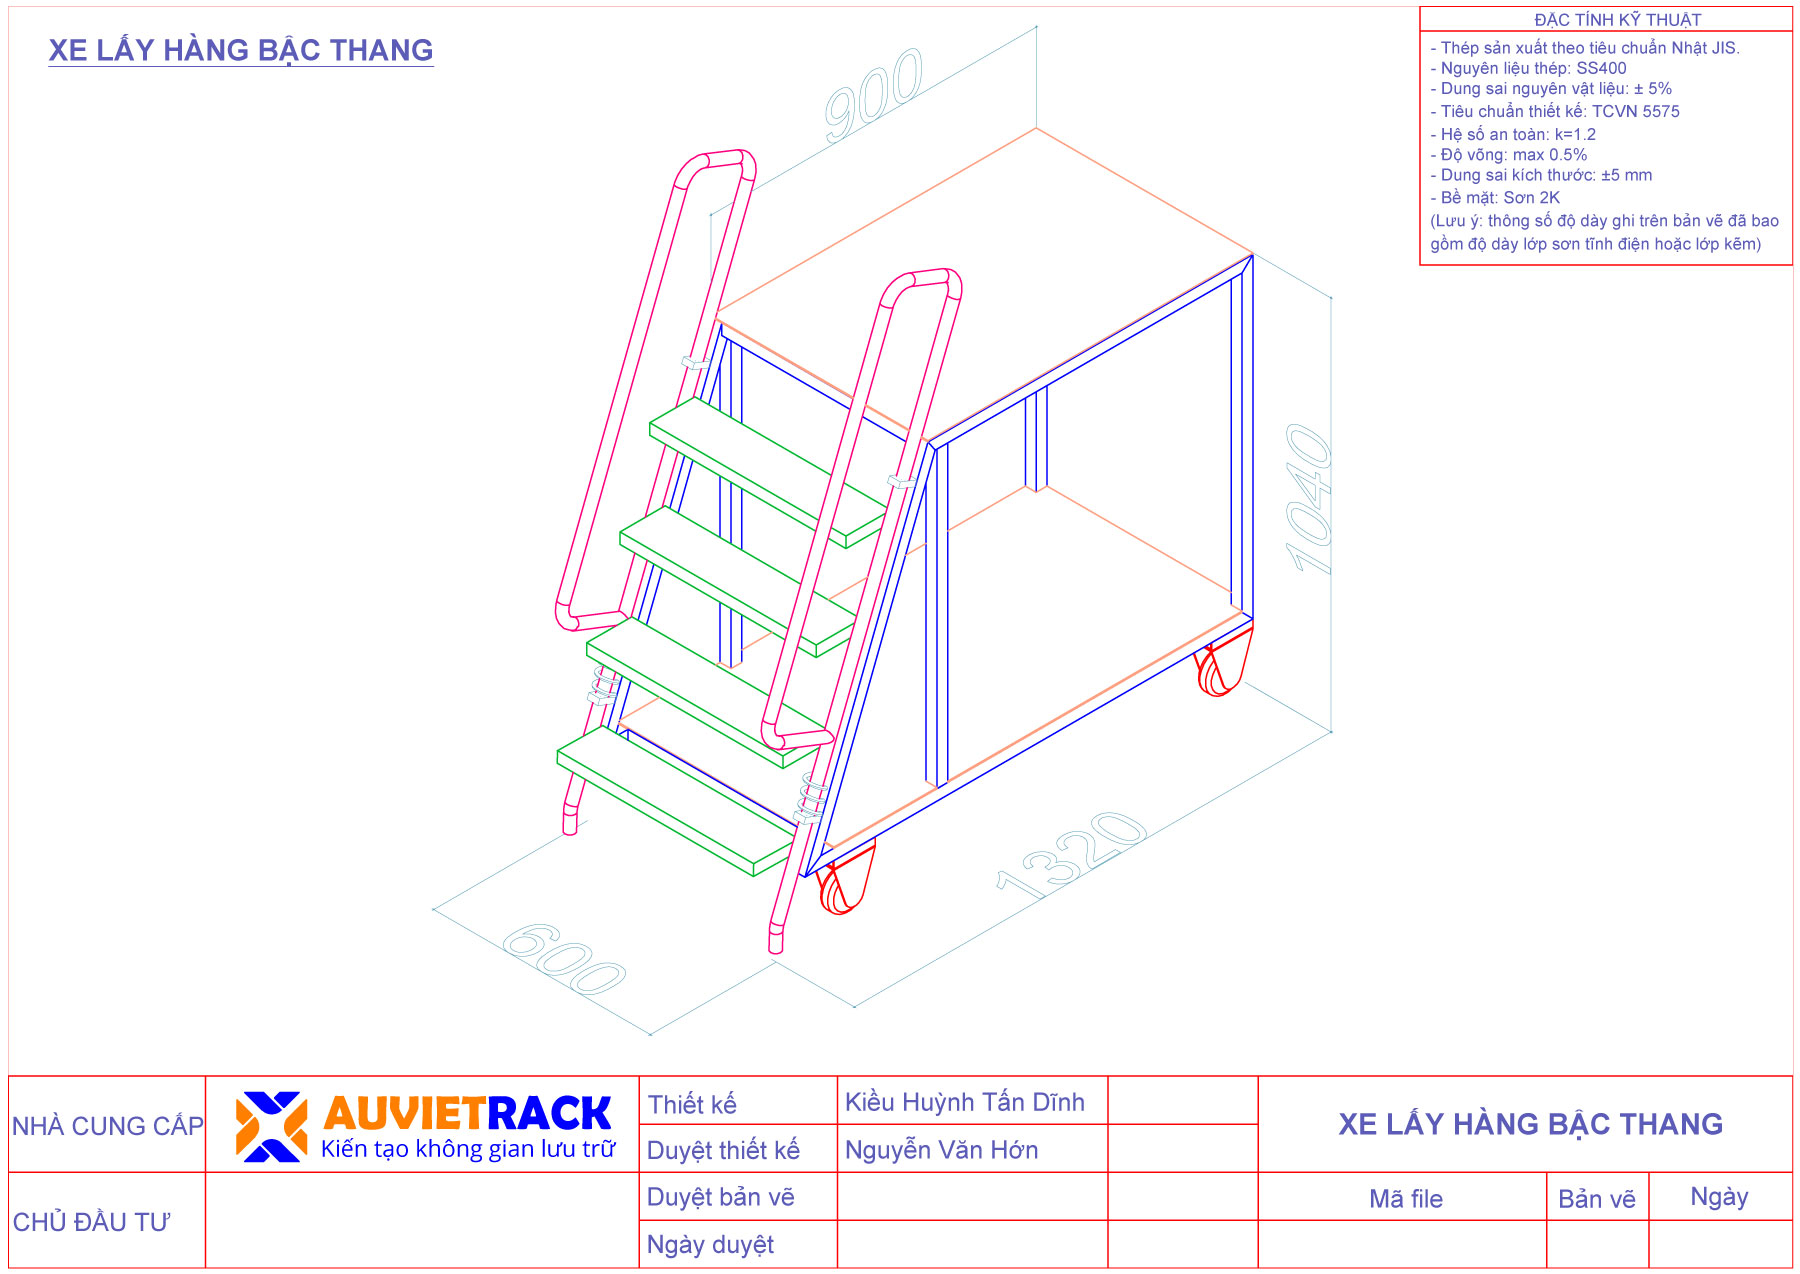 3D drawing of ladder carts - Au Viet RacK